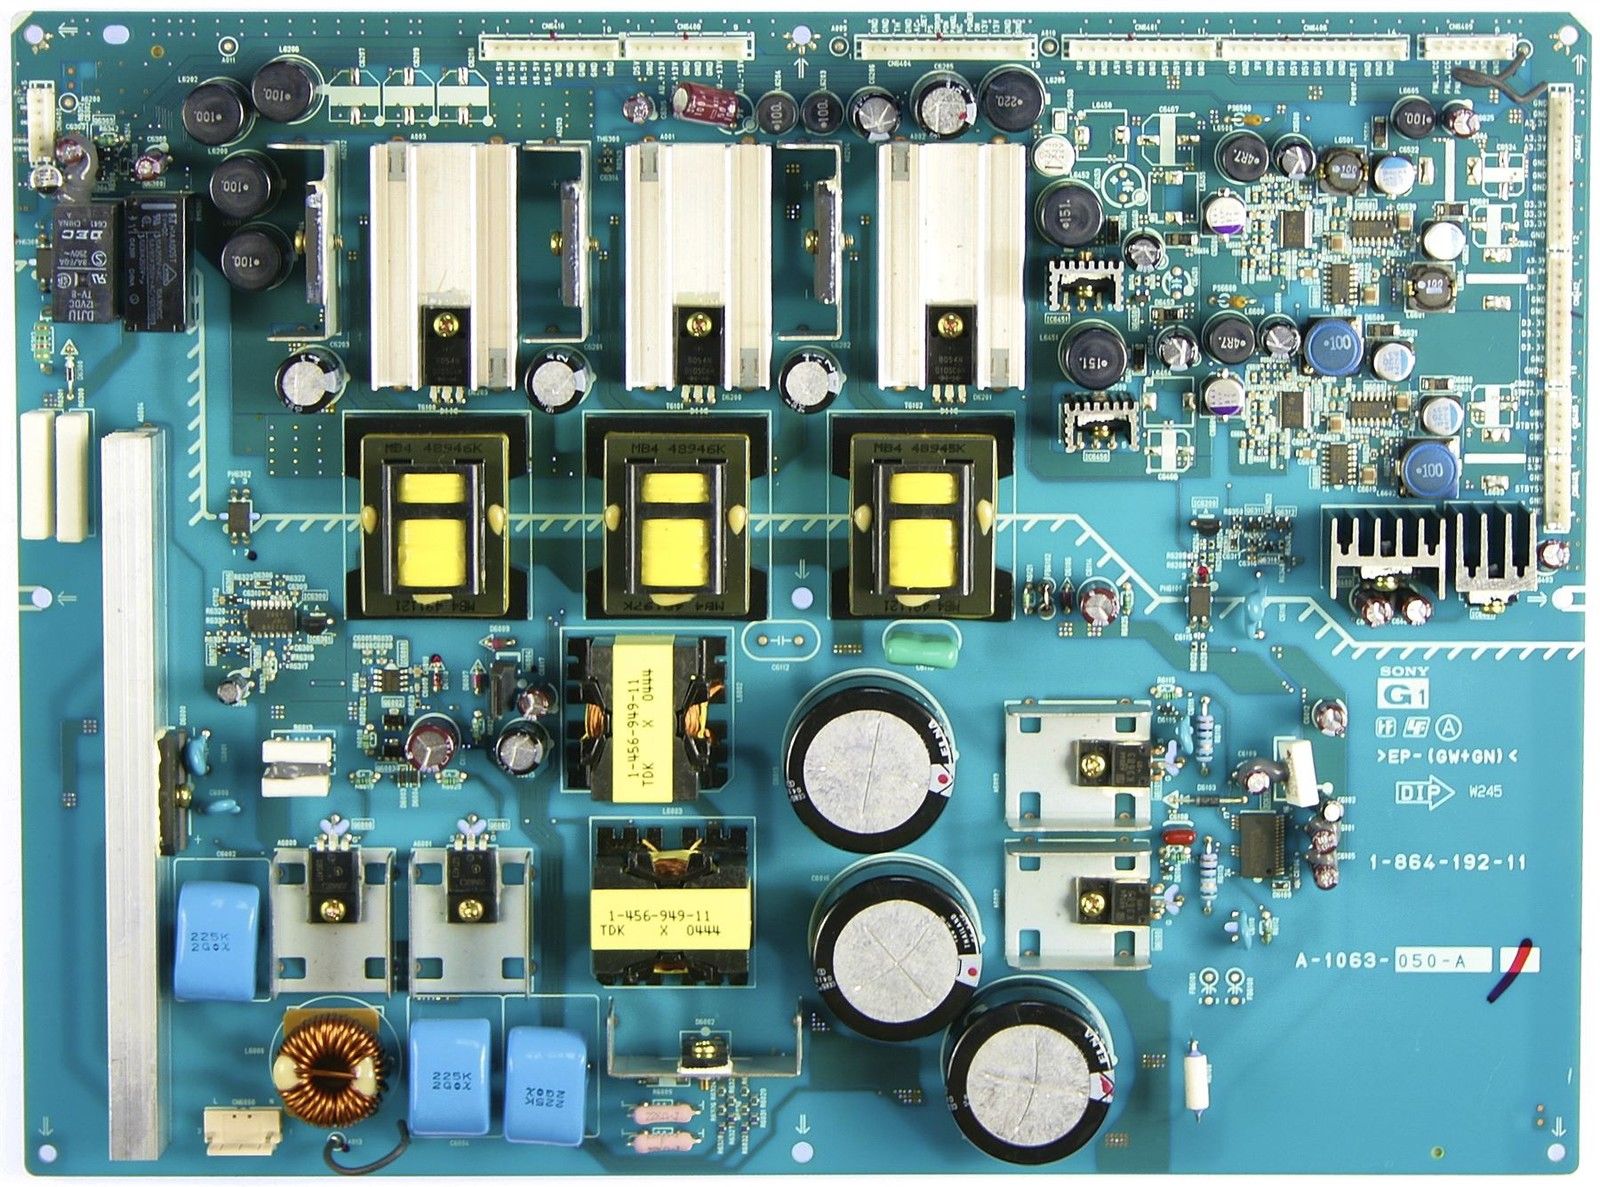 Sony A-1063-050-A Power Supply Board 1-864-192-11 FWD-42LX1